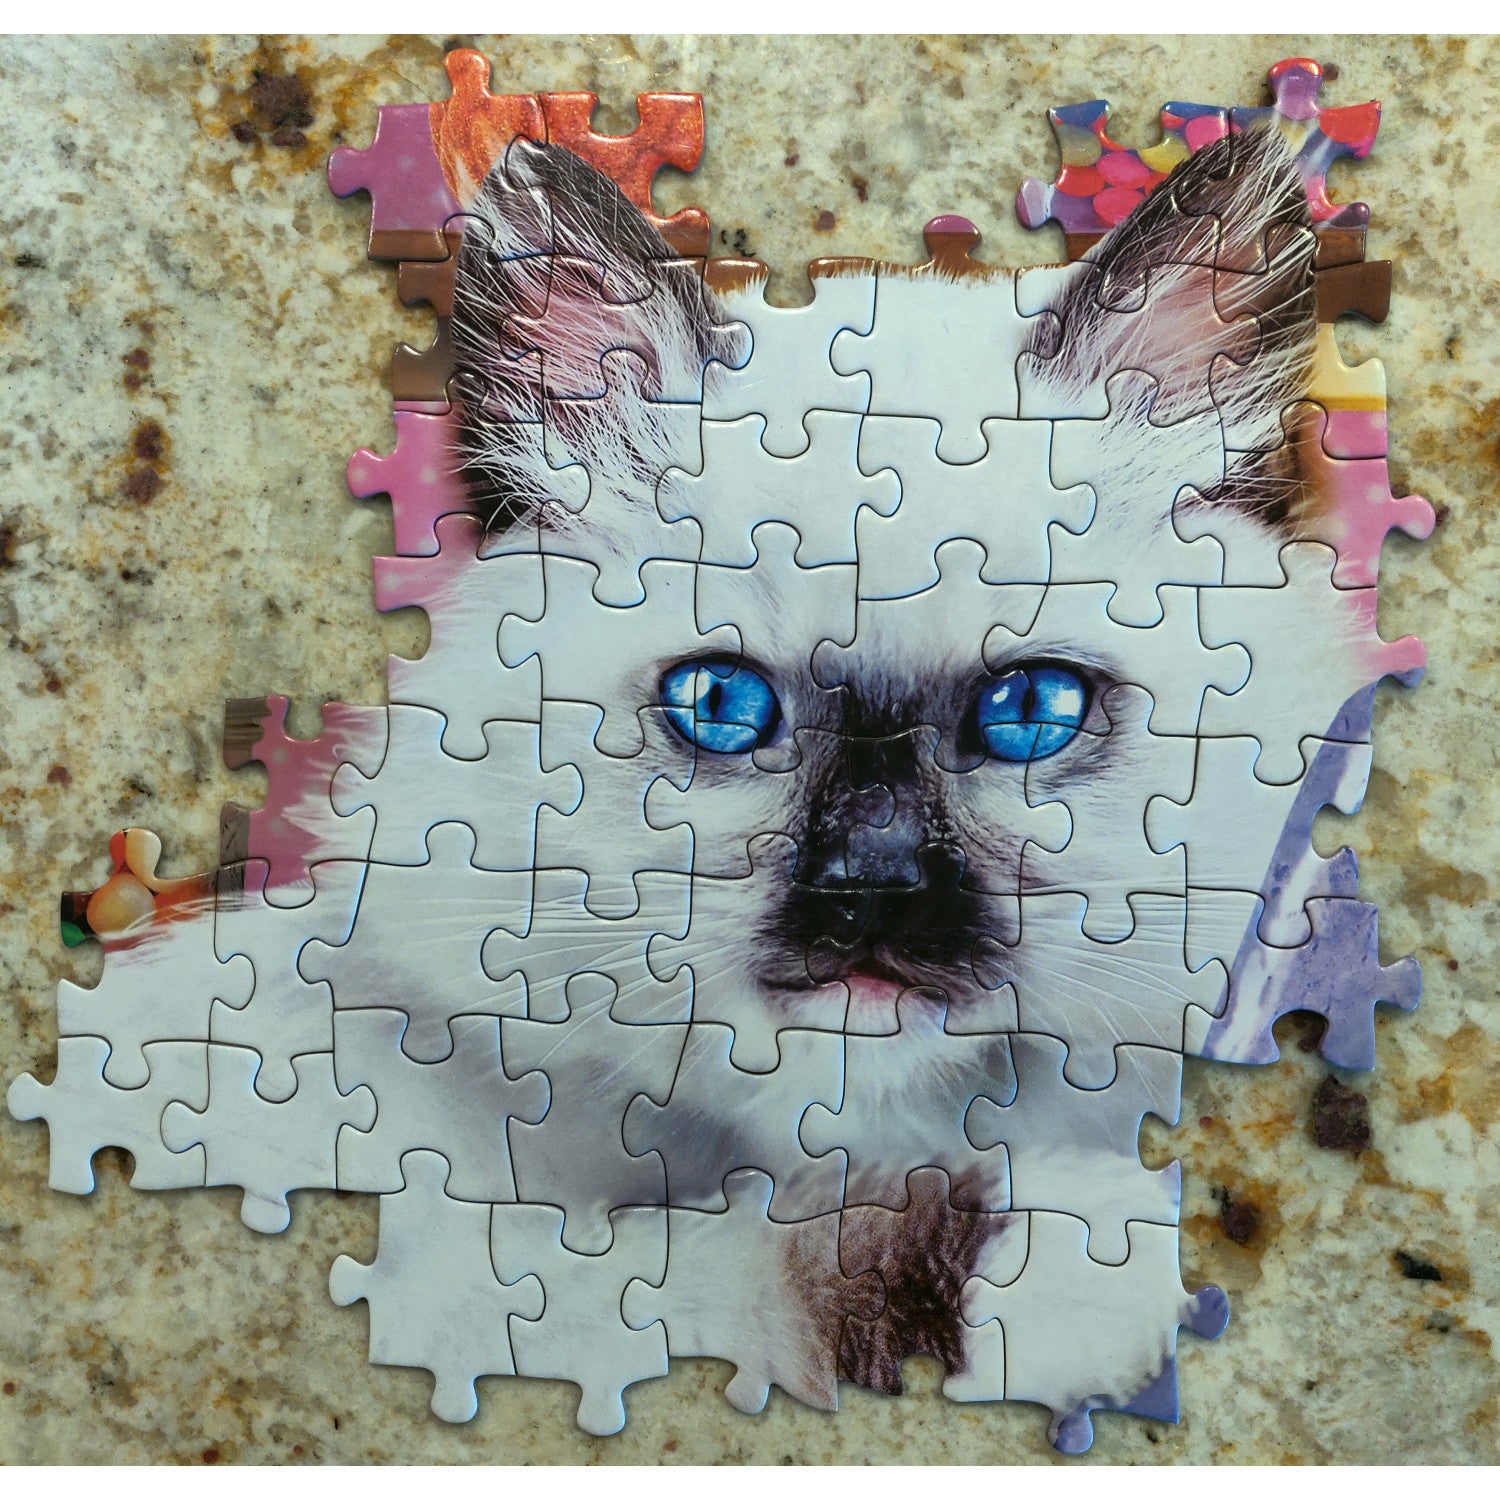 Wild & Whimsical - Kitten Cake Shop 300 Piece EZ Grip Jigsaw Puzzle